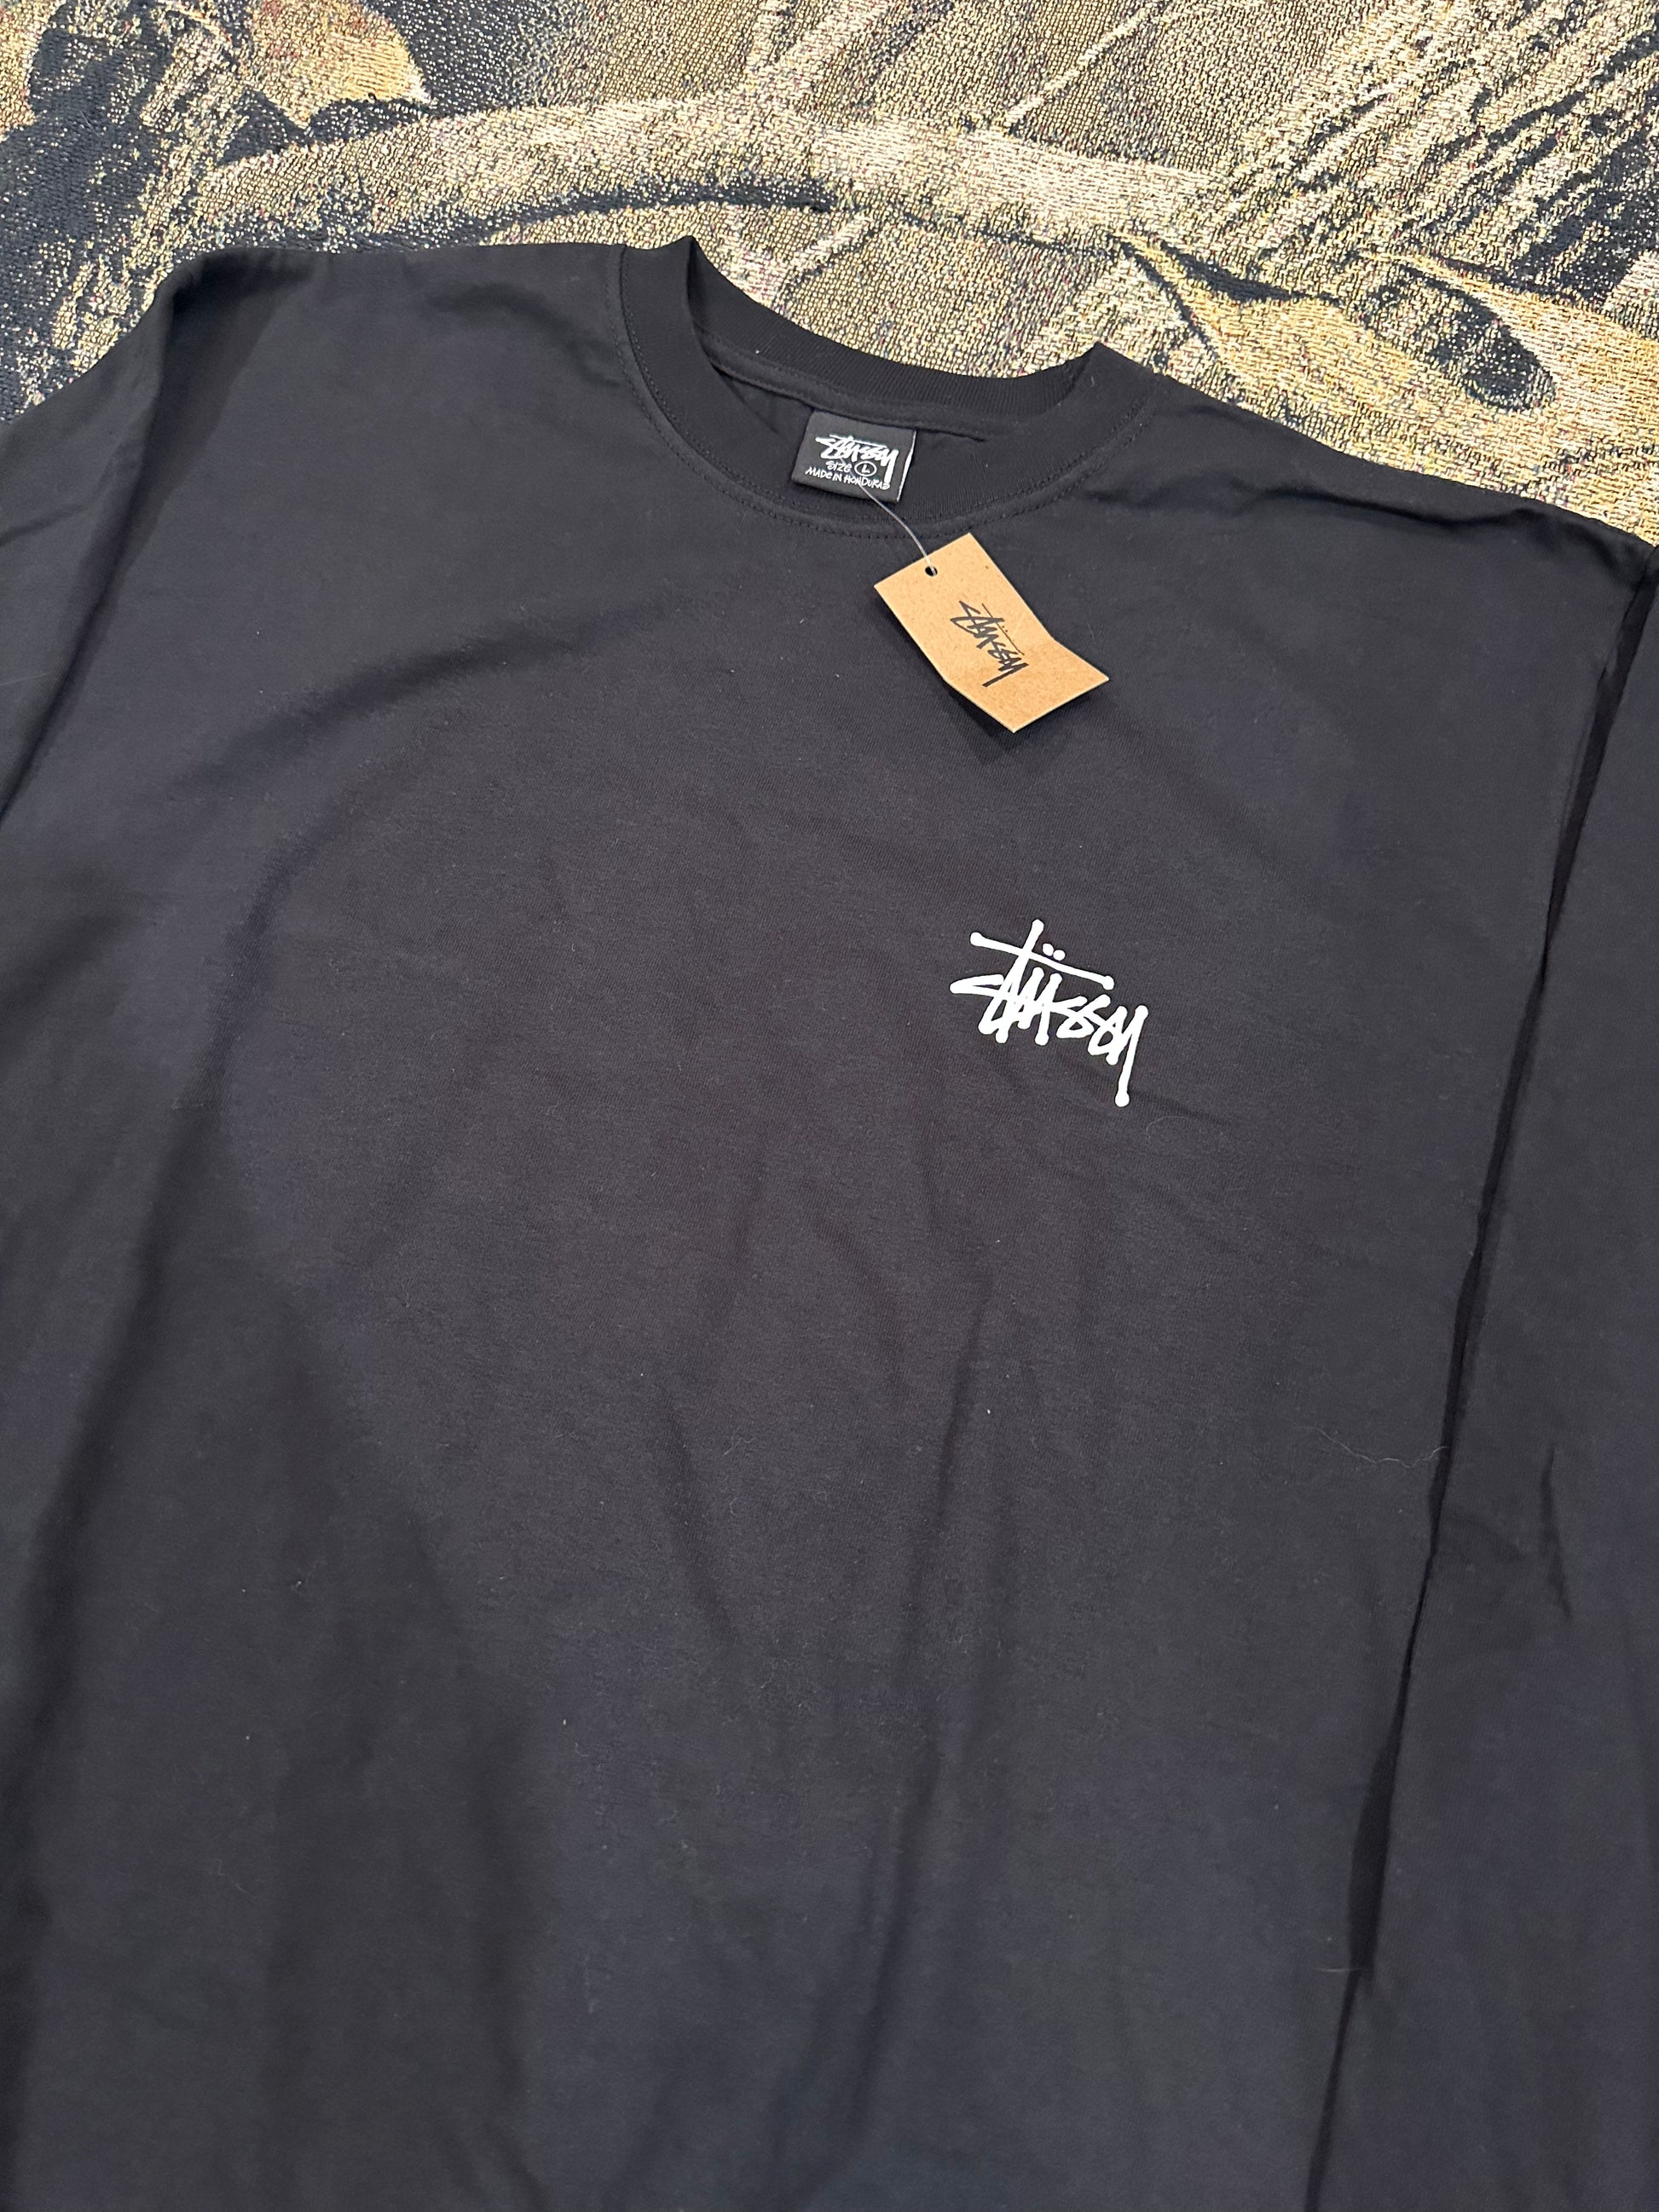 Stussy longsleeve shirt new w/ tags – don't sleep vintage